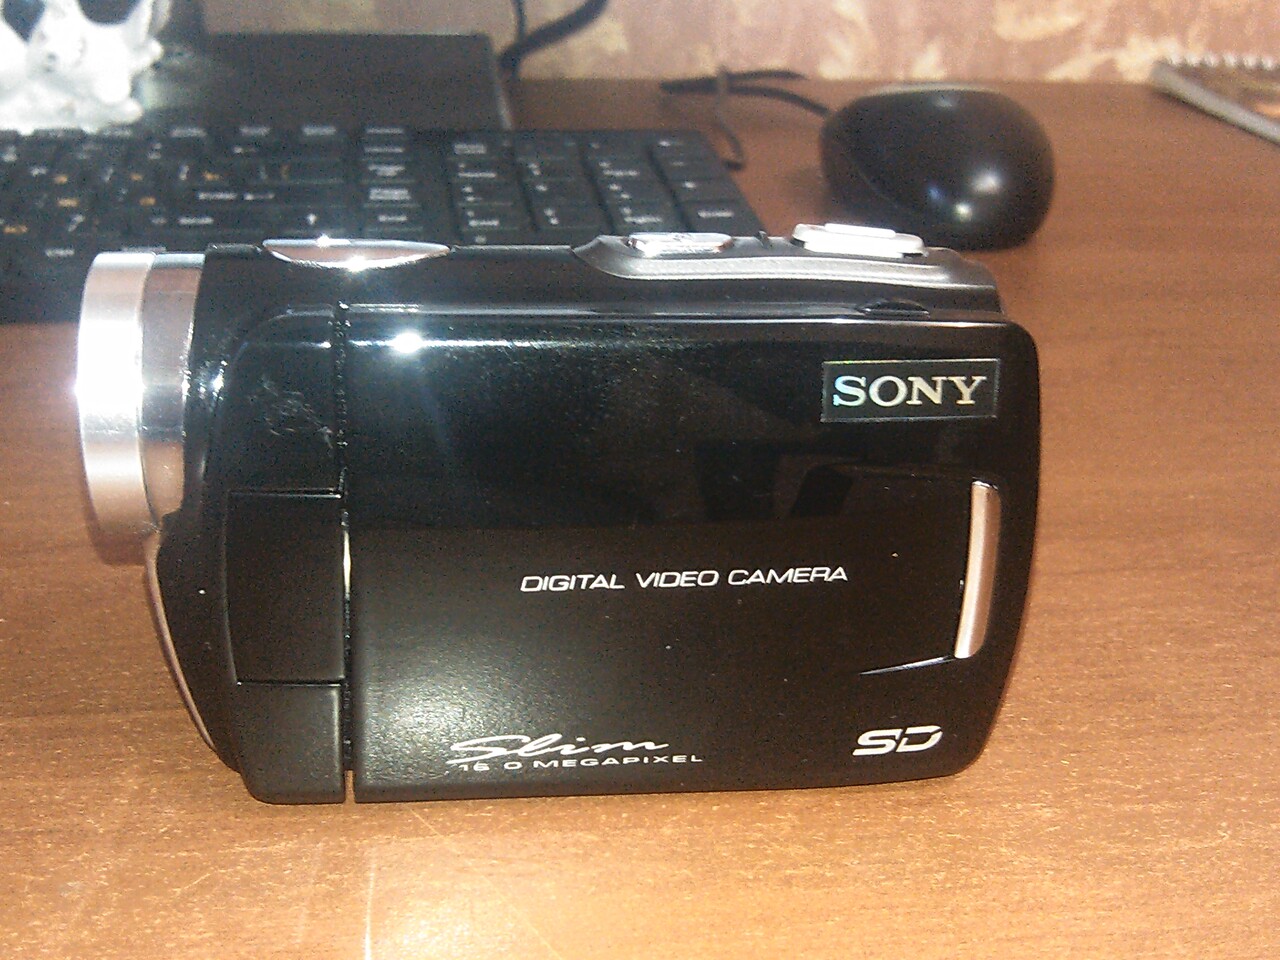 Digital video camera sony 12 megapixel инструкция